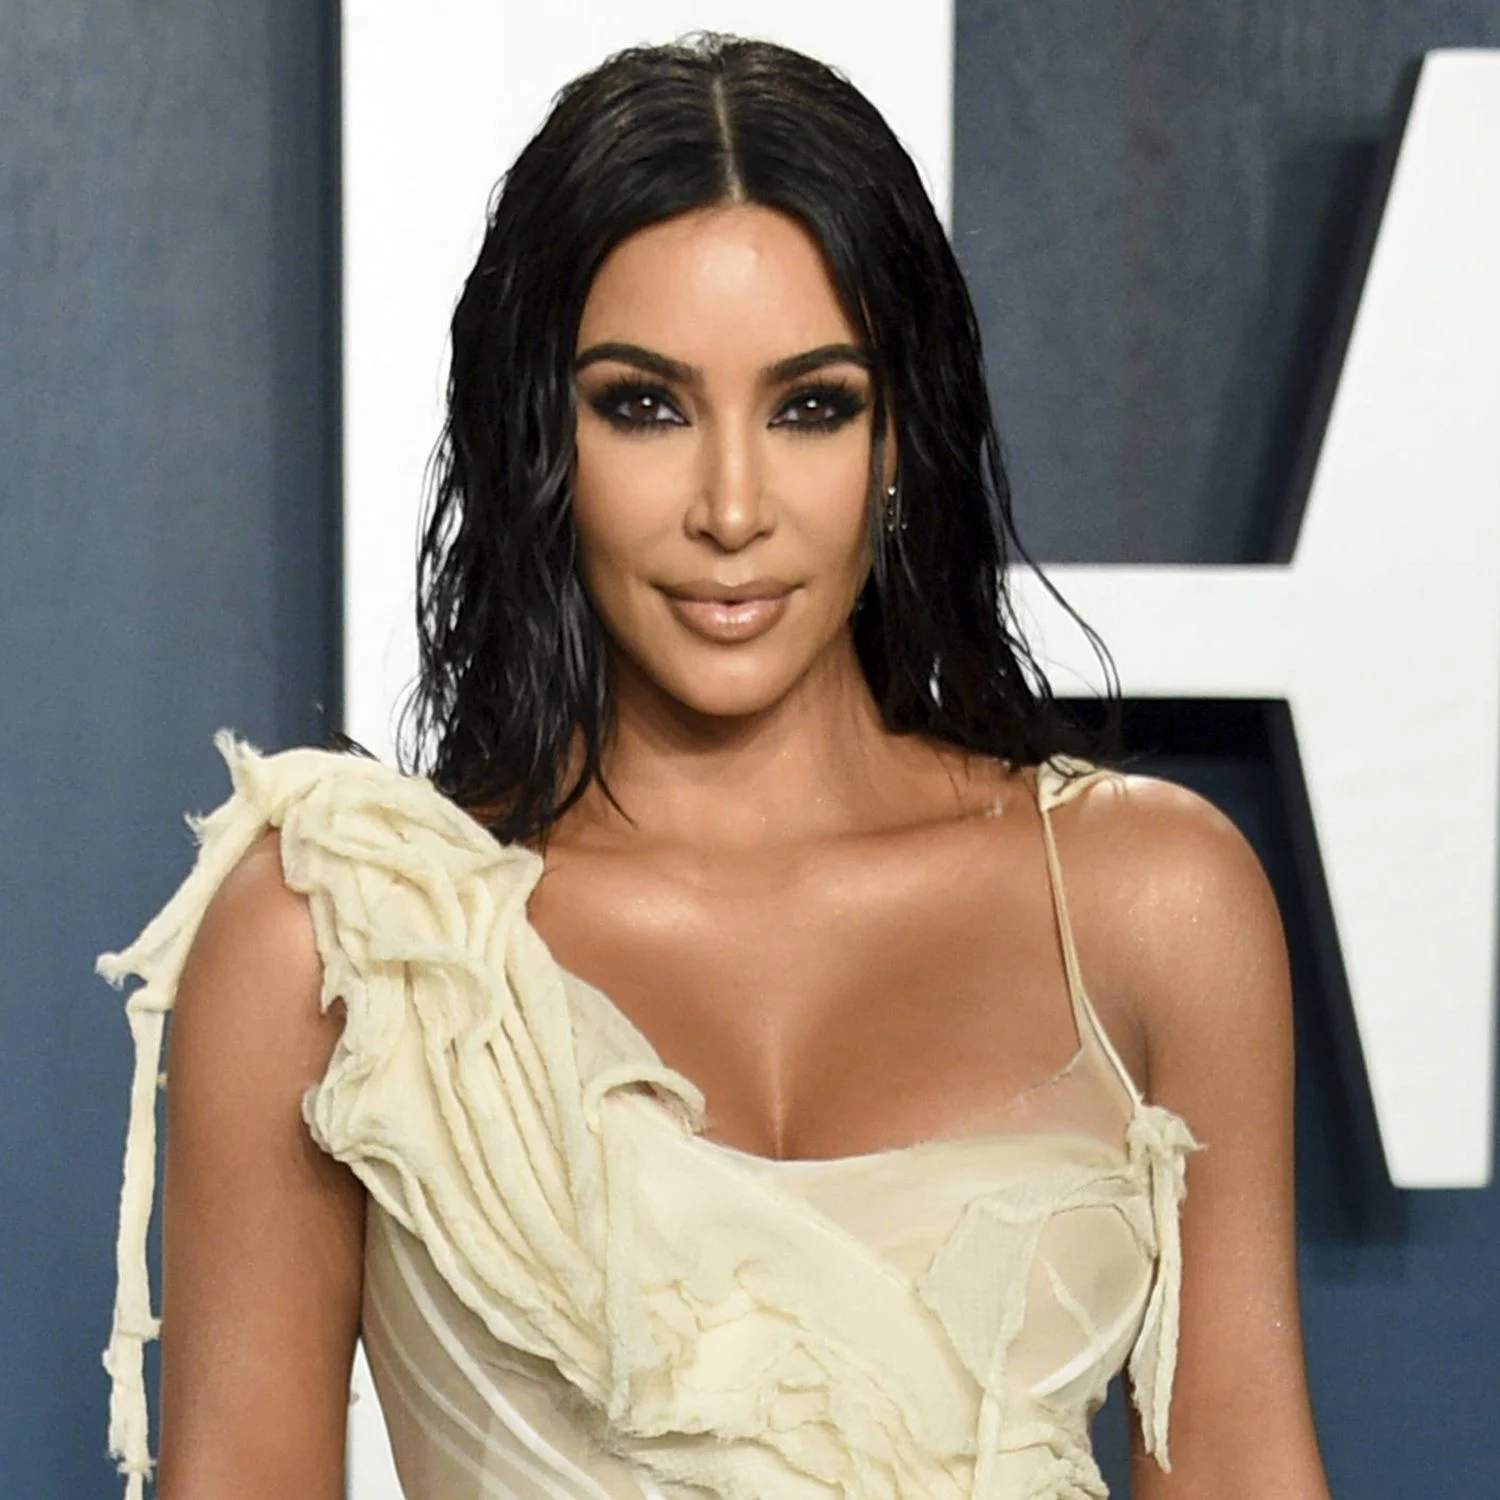 Kim Kardashian: Biography, Family, Age, Boyfriend, Careers, Net Worth